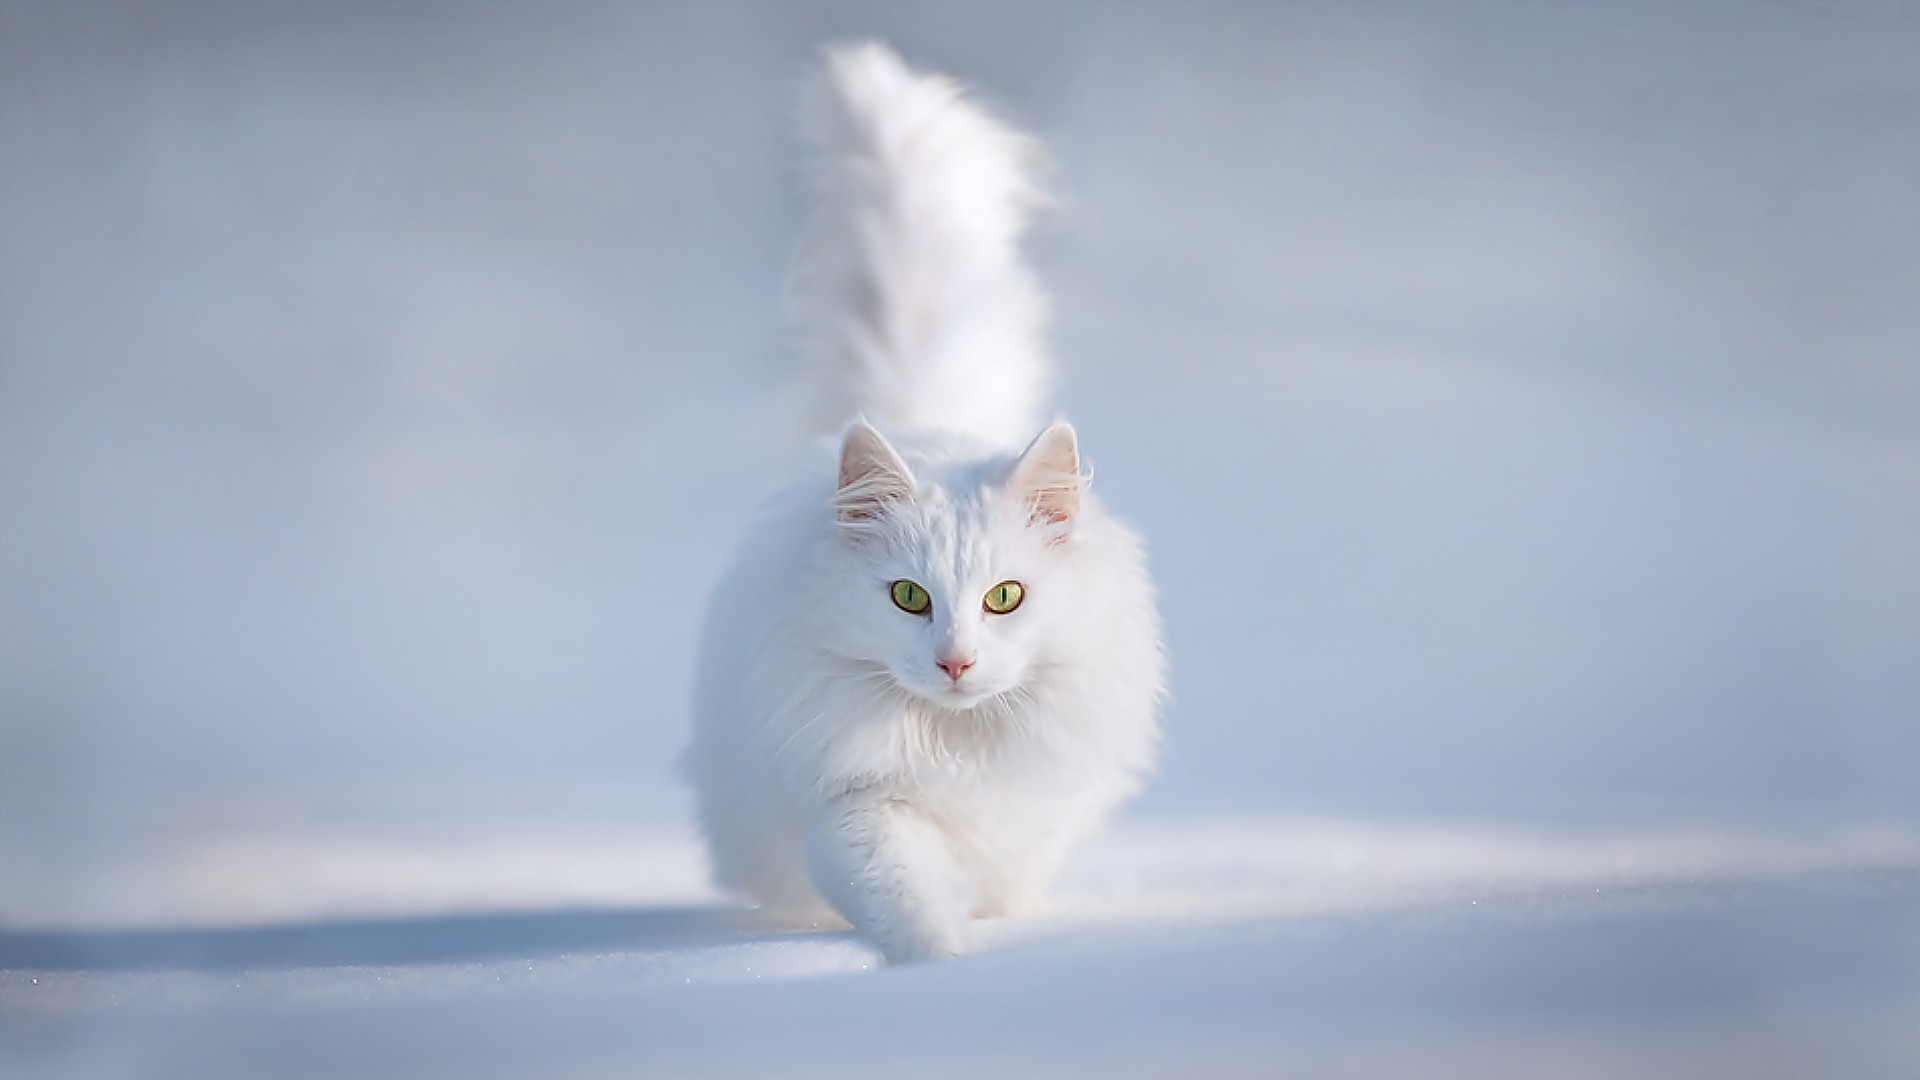 Cat In Snow Wallpaper High Quality Desktop